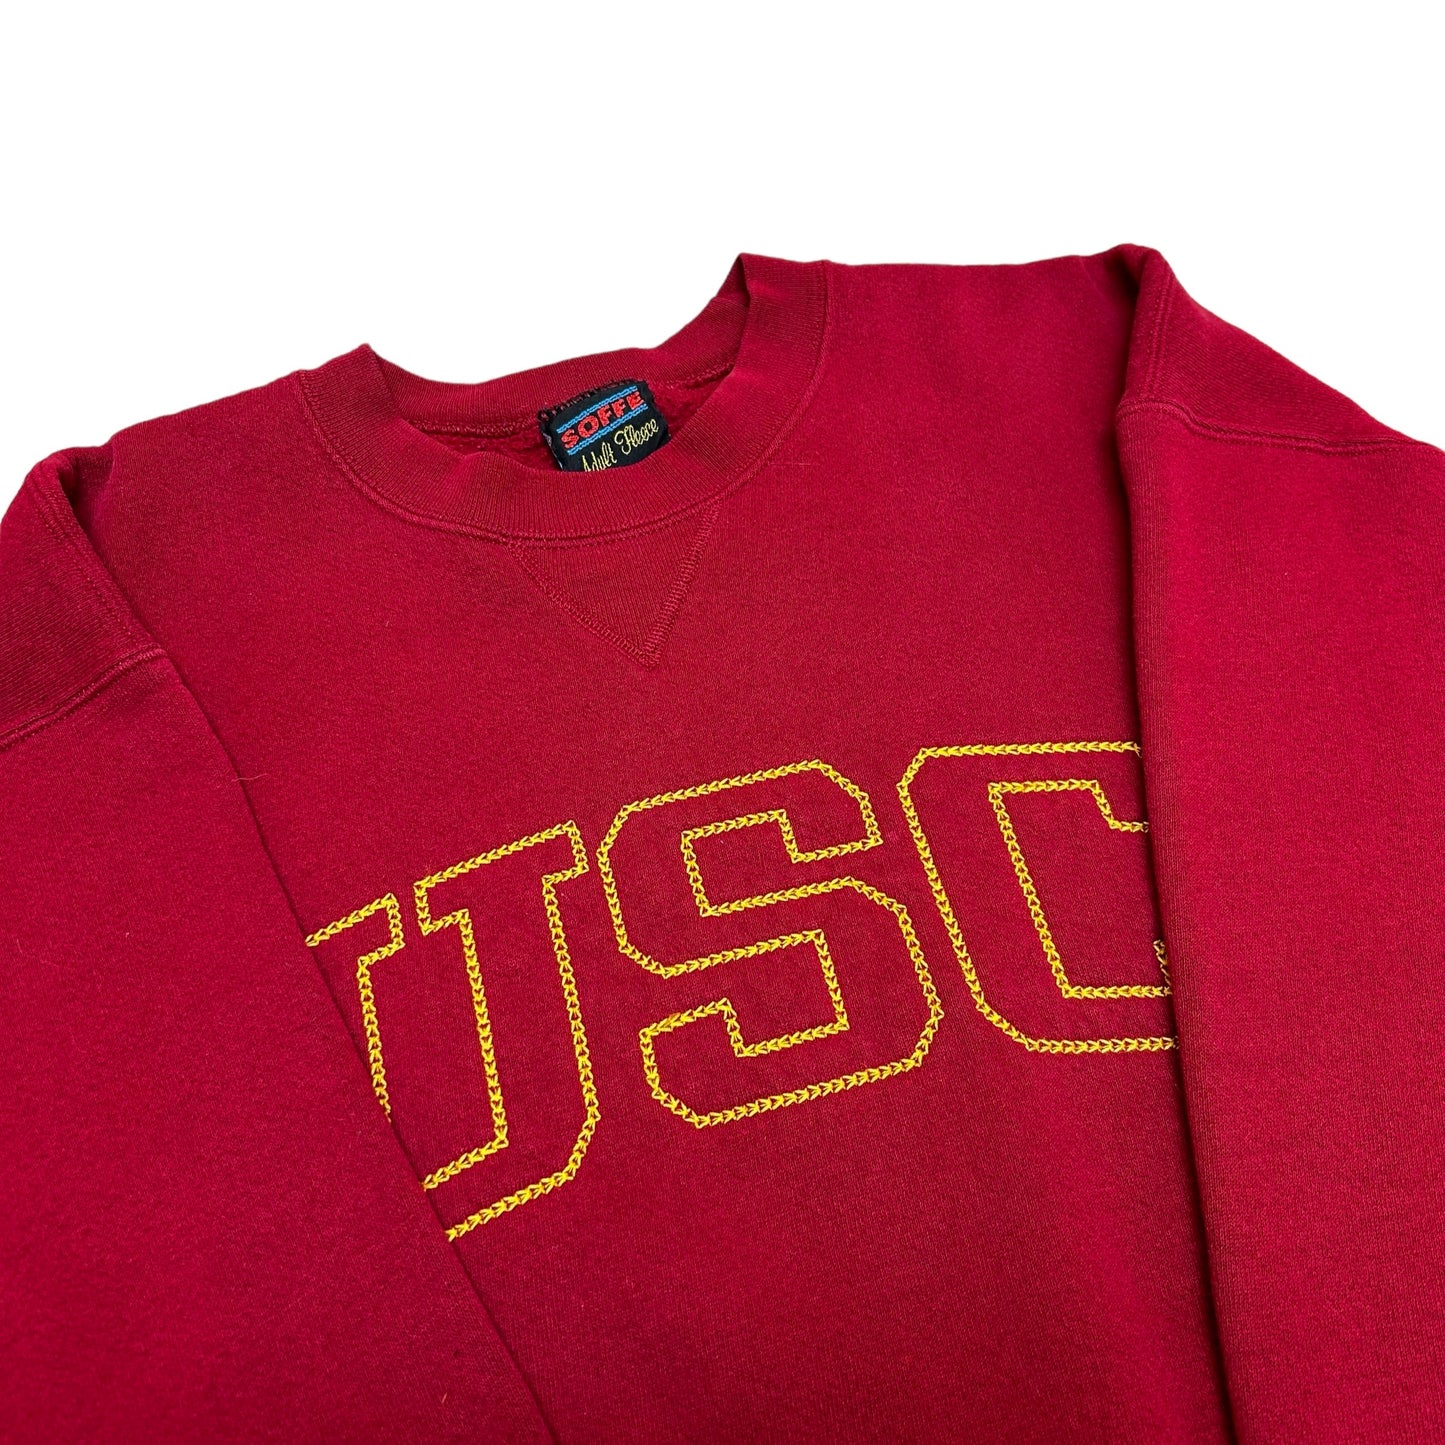 Vintage 1990s USC Trojans Burgundy Embroidered Crewneck Sweatshirt - Size Large